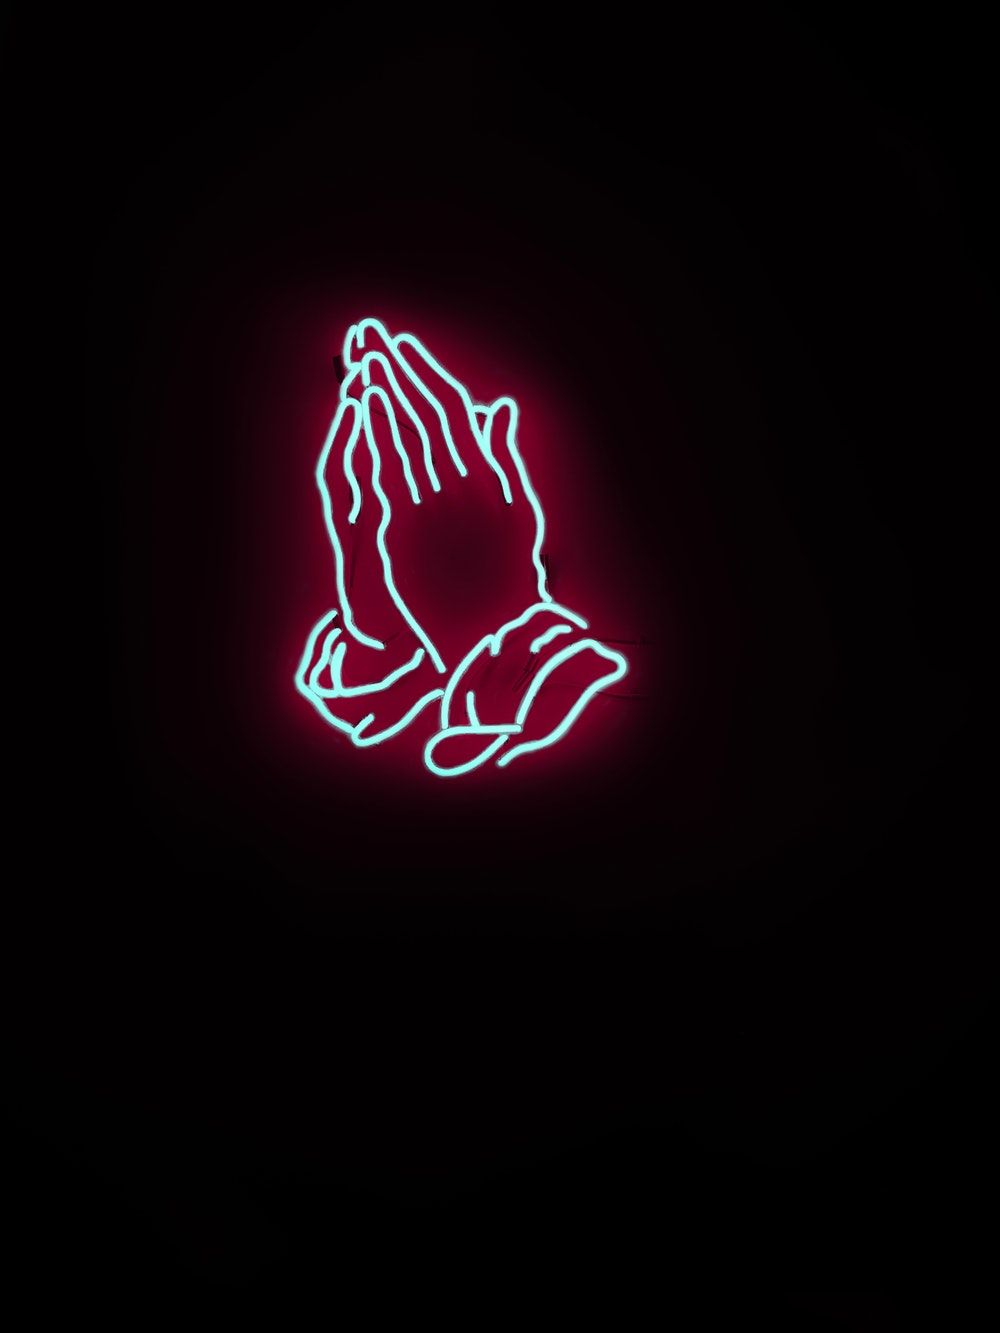 Praying Hands Wallpaper Top Background